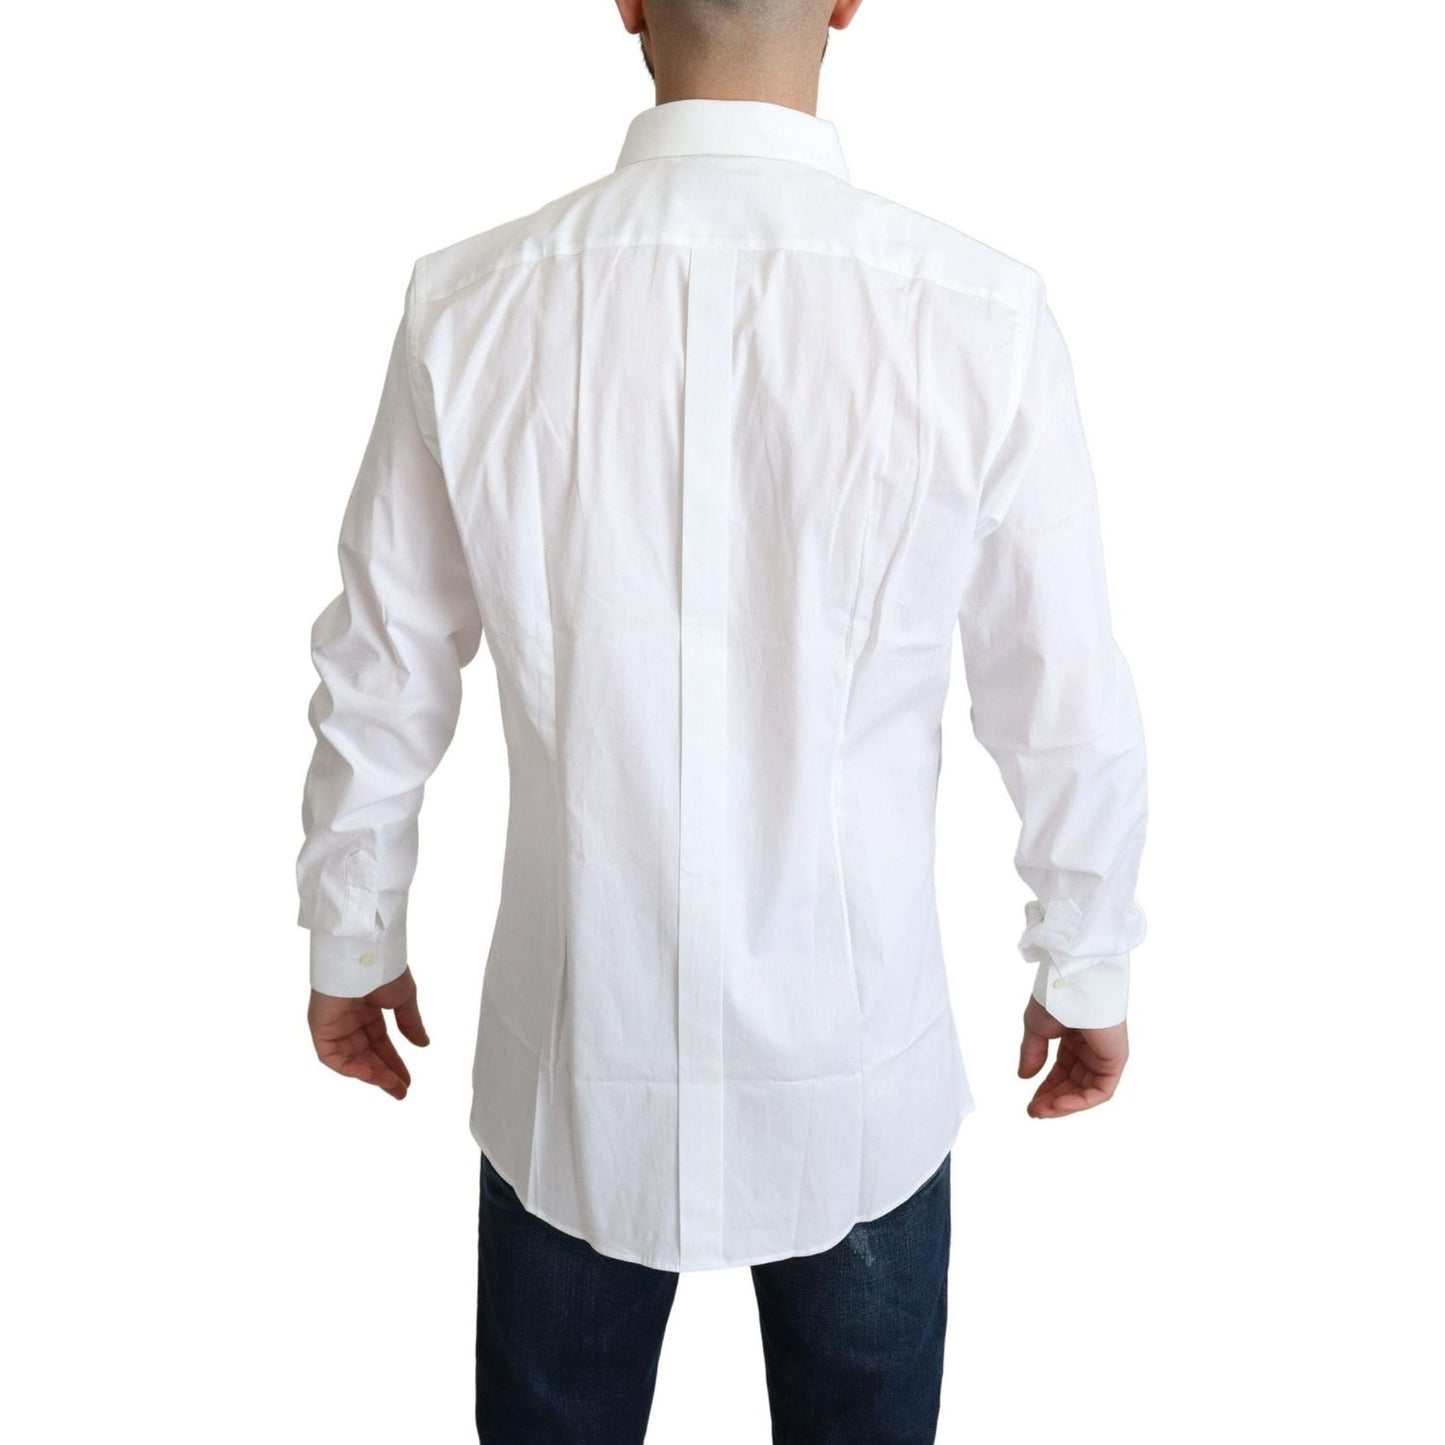 Dolce & Gabbana Elegant White Cotton Stretch Dress Shirt MAN SHIRTS white-cotton-stretch-men-dress-formal-shirt